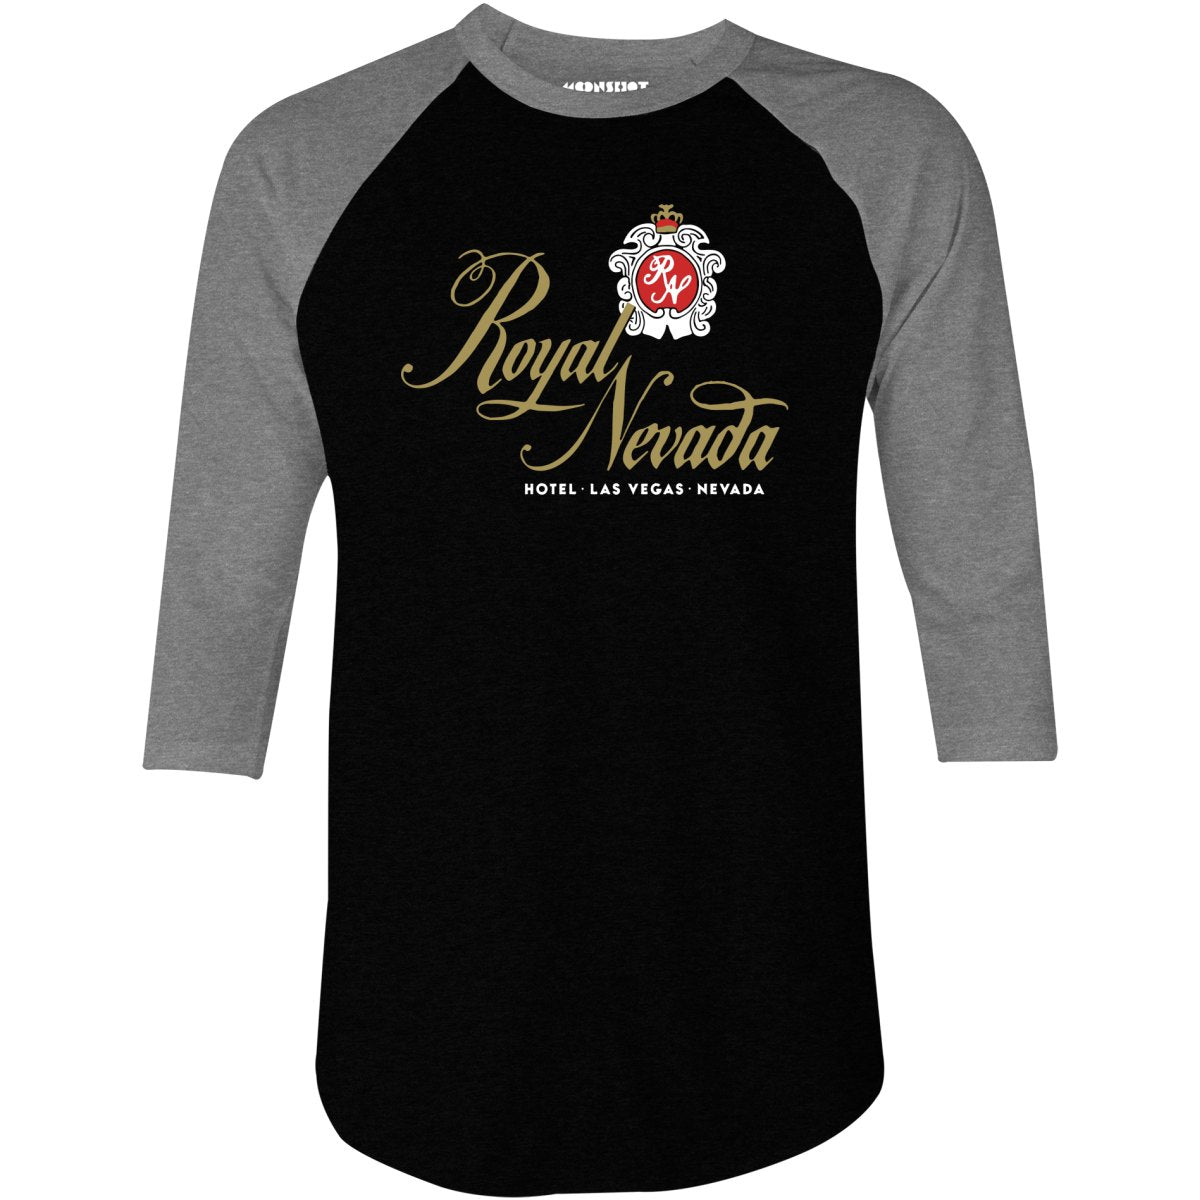 Royal Nevada Hotel & Casino - Vintage Las Vegas - 3/4 Sleeve Raglan T-Shirt